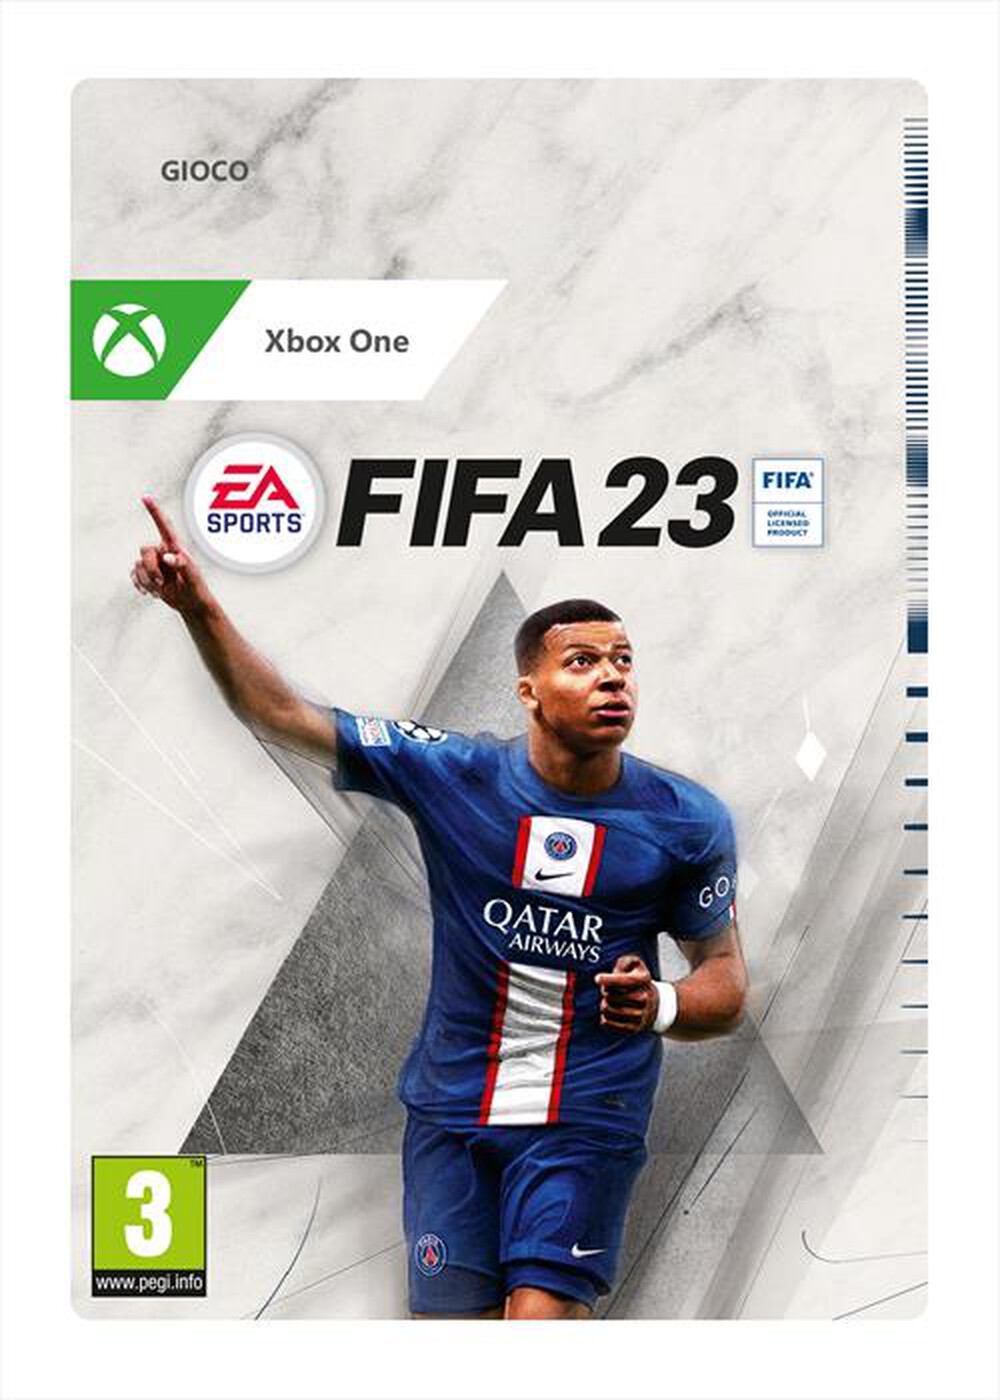 "MICROSOFT - FIFA 23 STANDARD EDITION Xbox One"